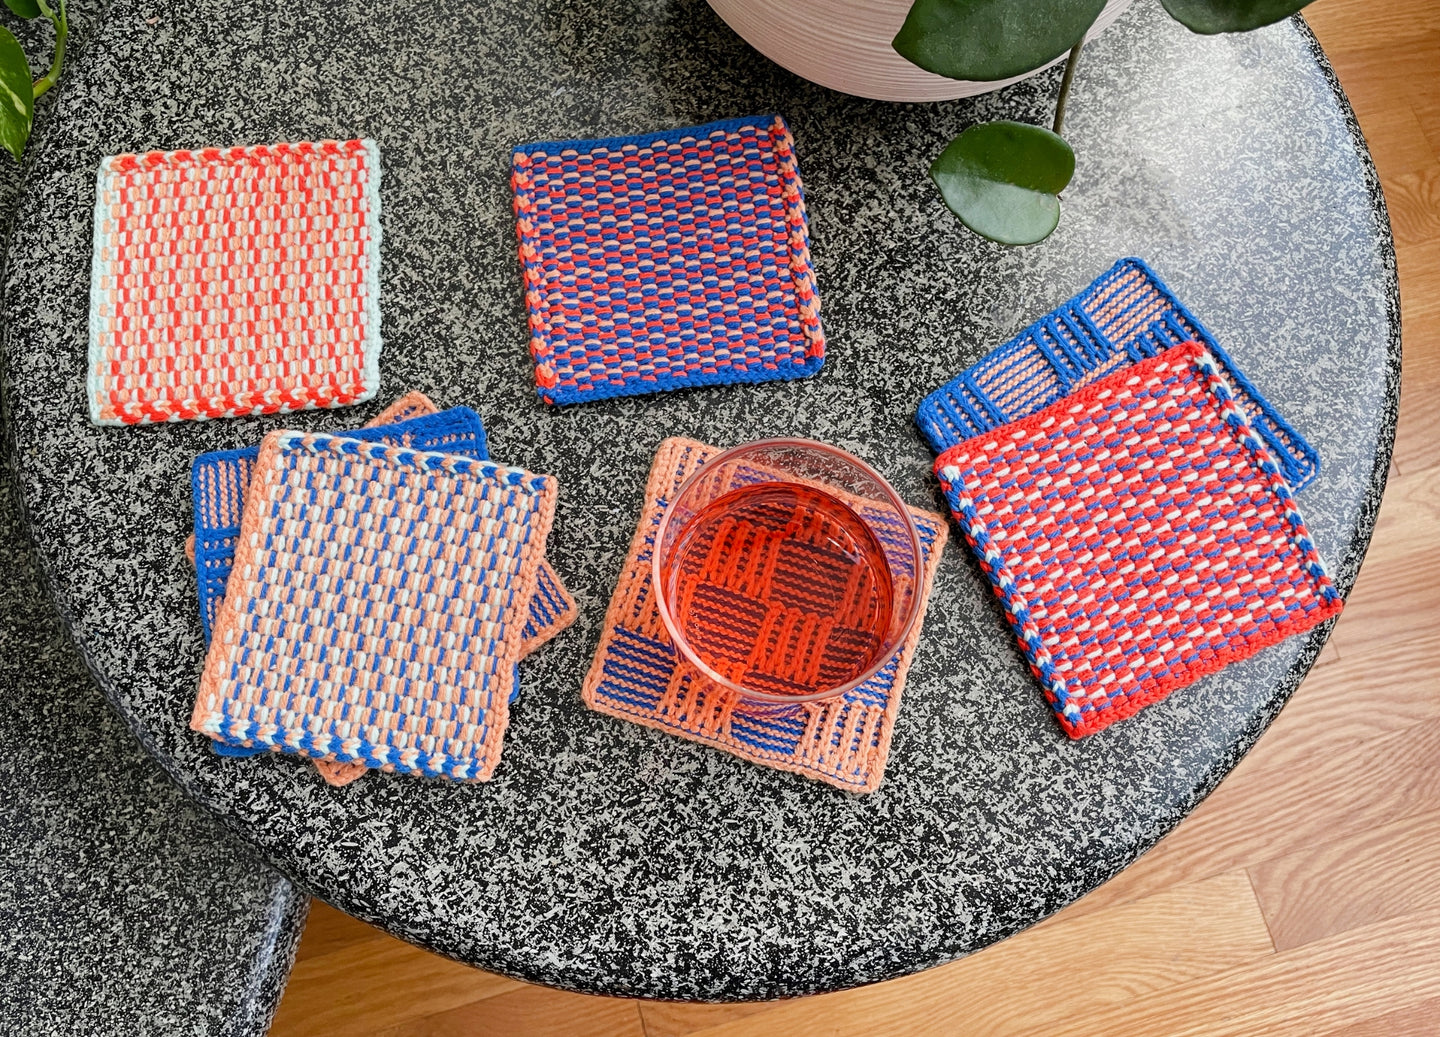 Verloop colorful knit coaster sets